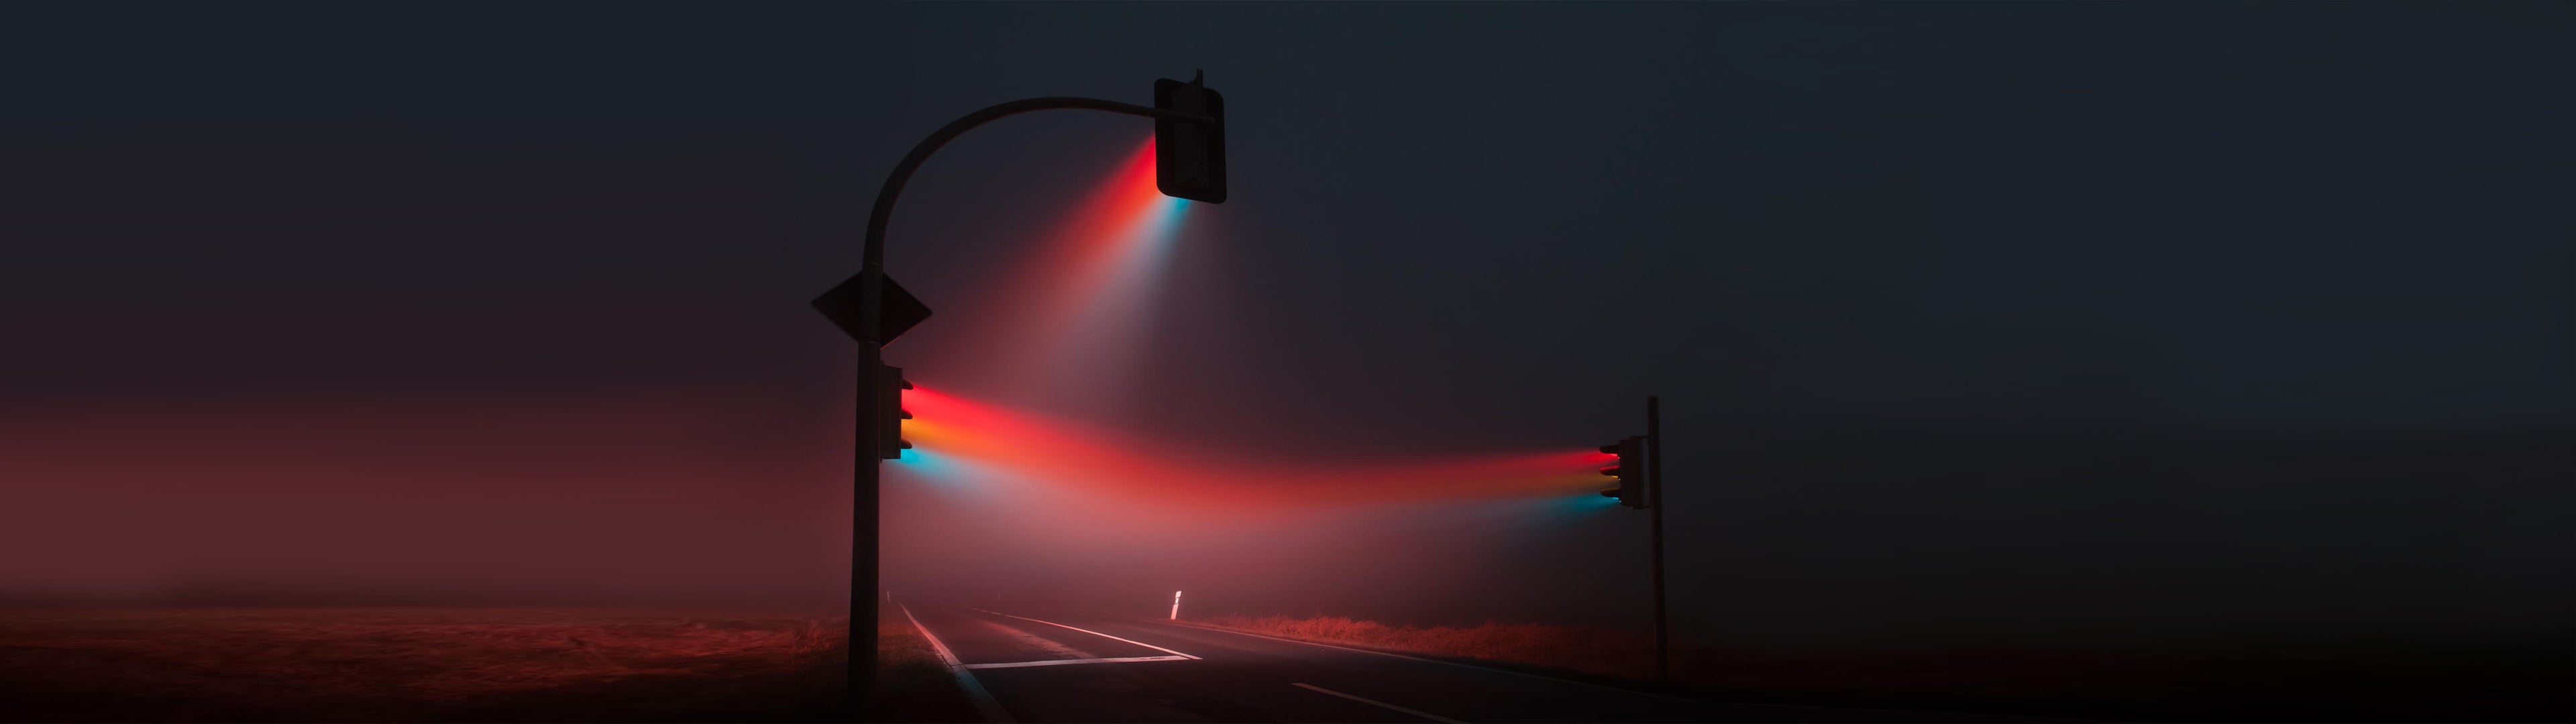 Traffic light wallpaper [3840x1080]